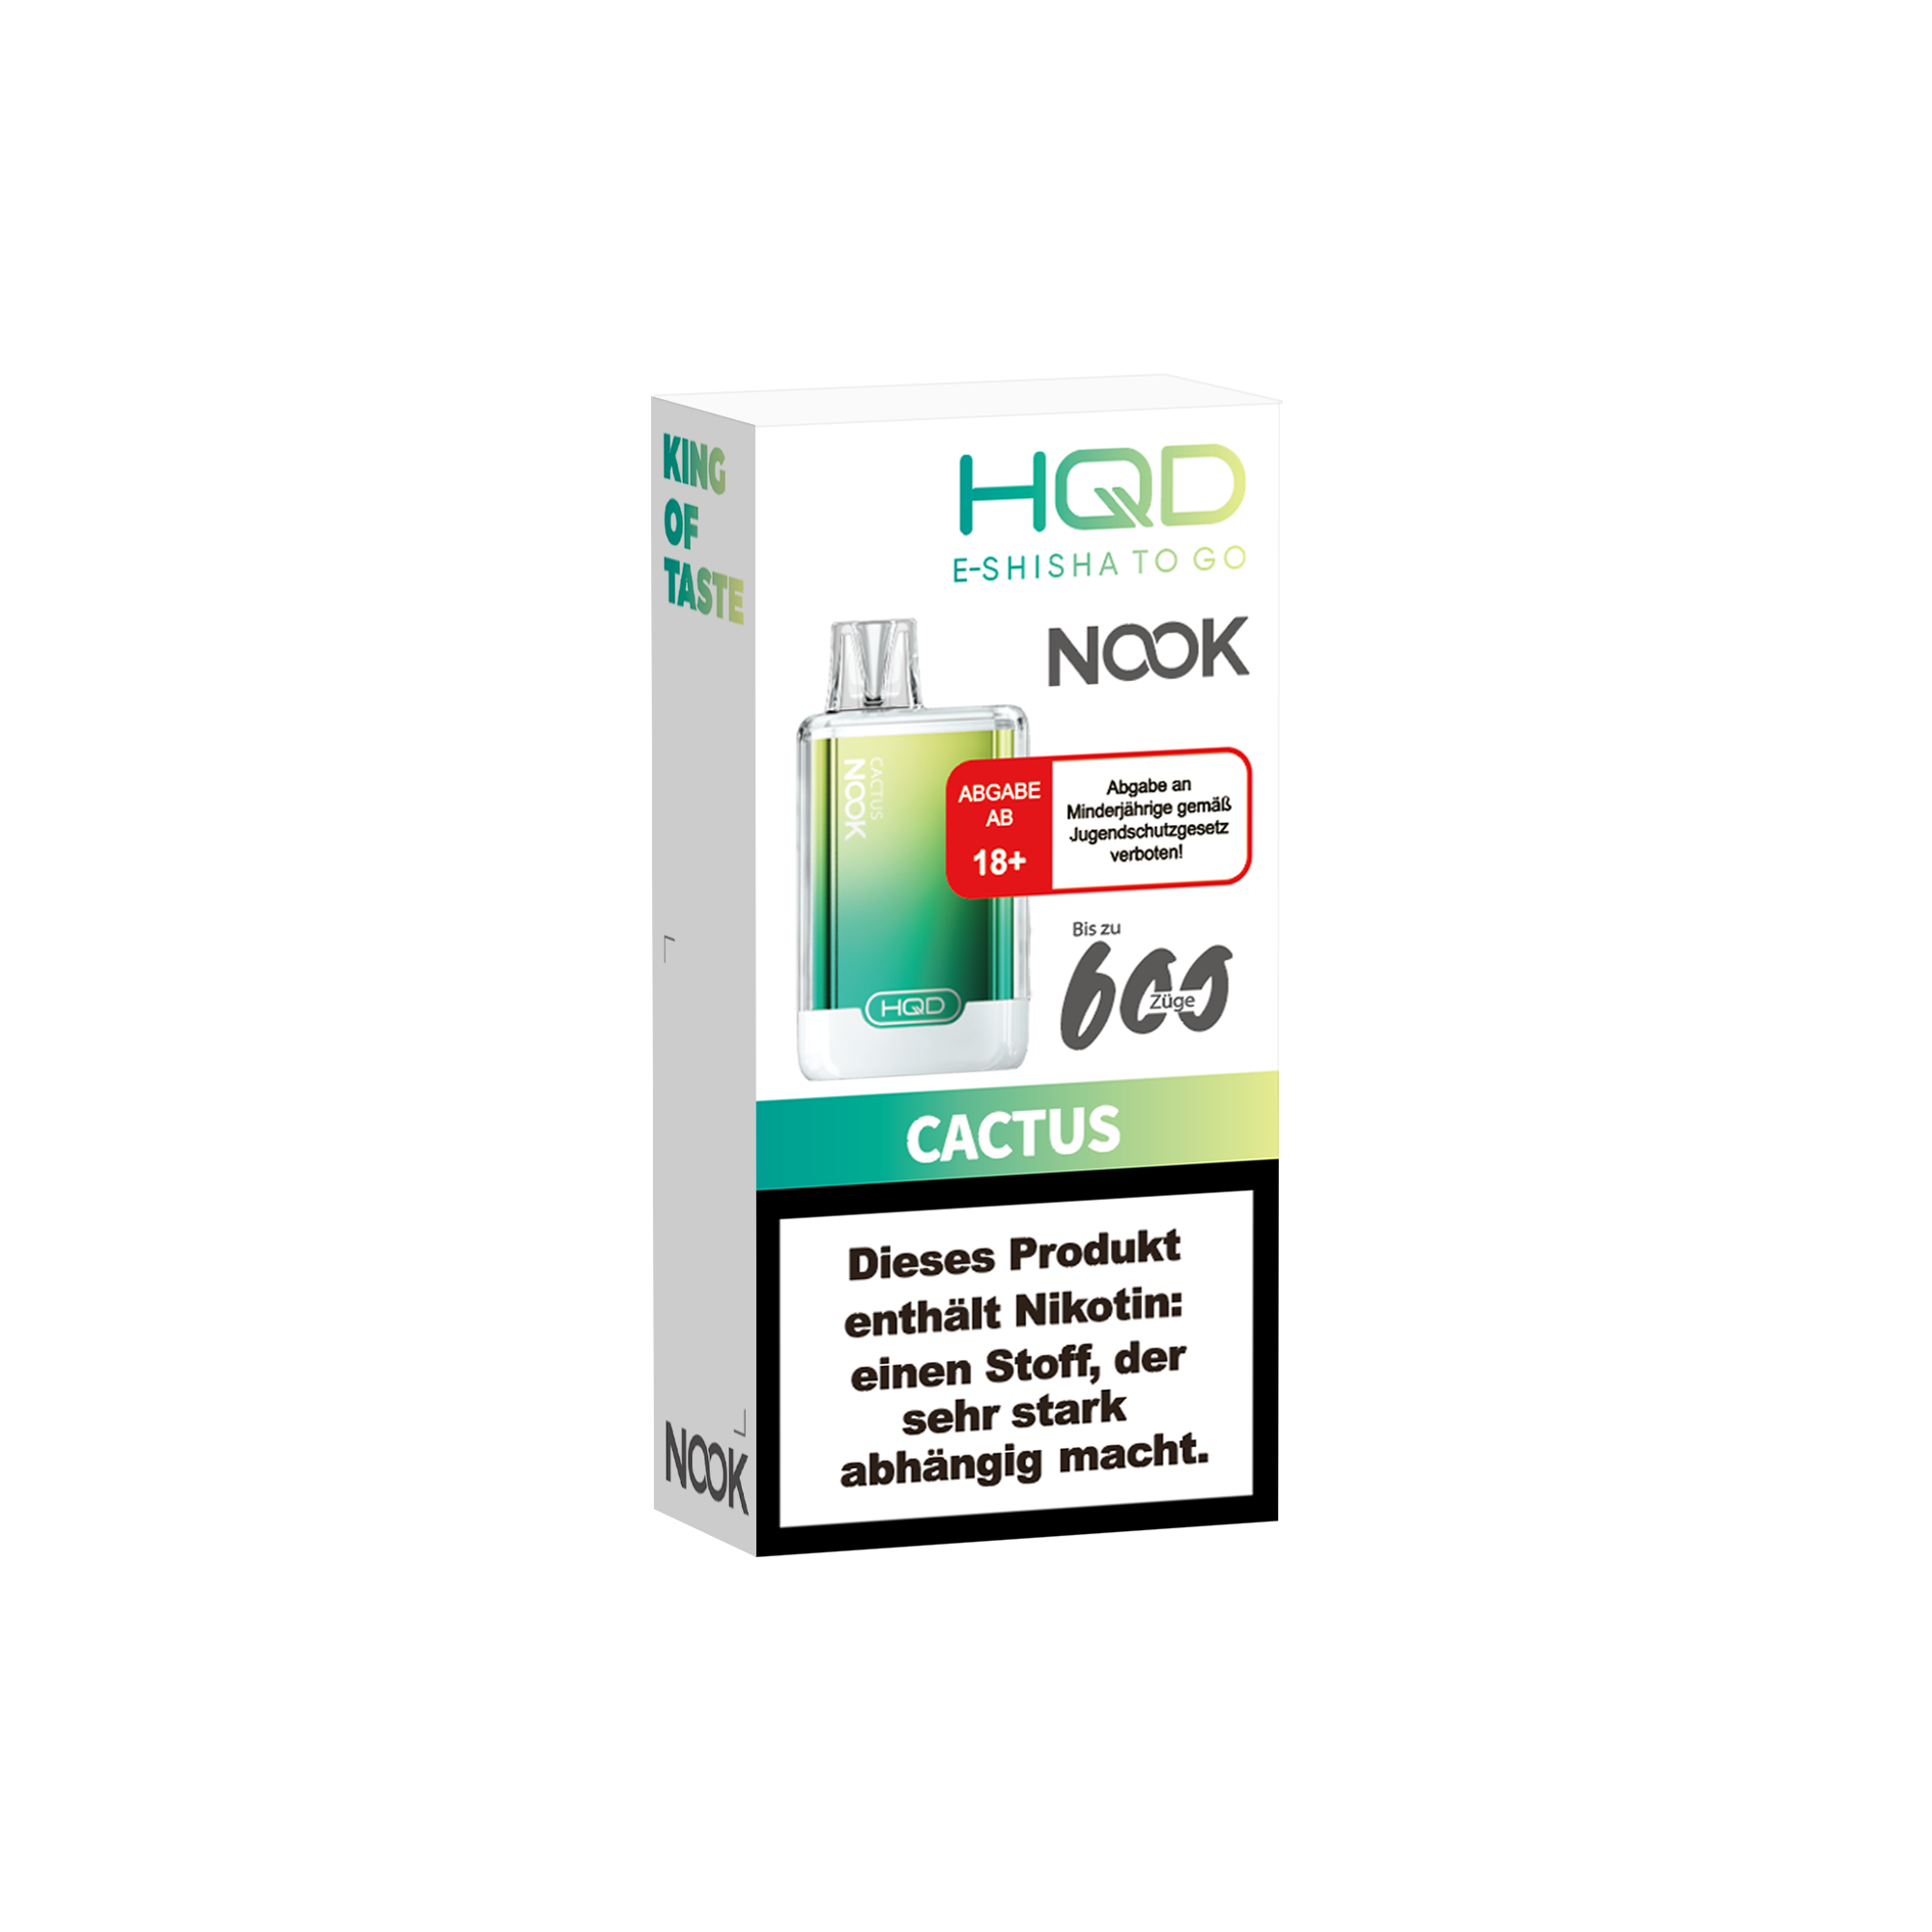 E-Zigarette HQD Nook CACTUS 18mg Nikotin 600